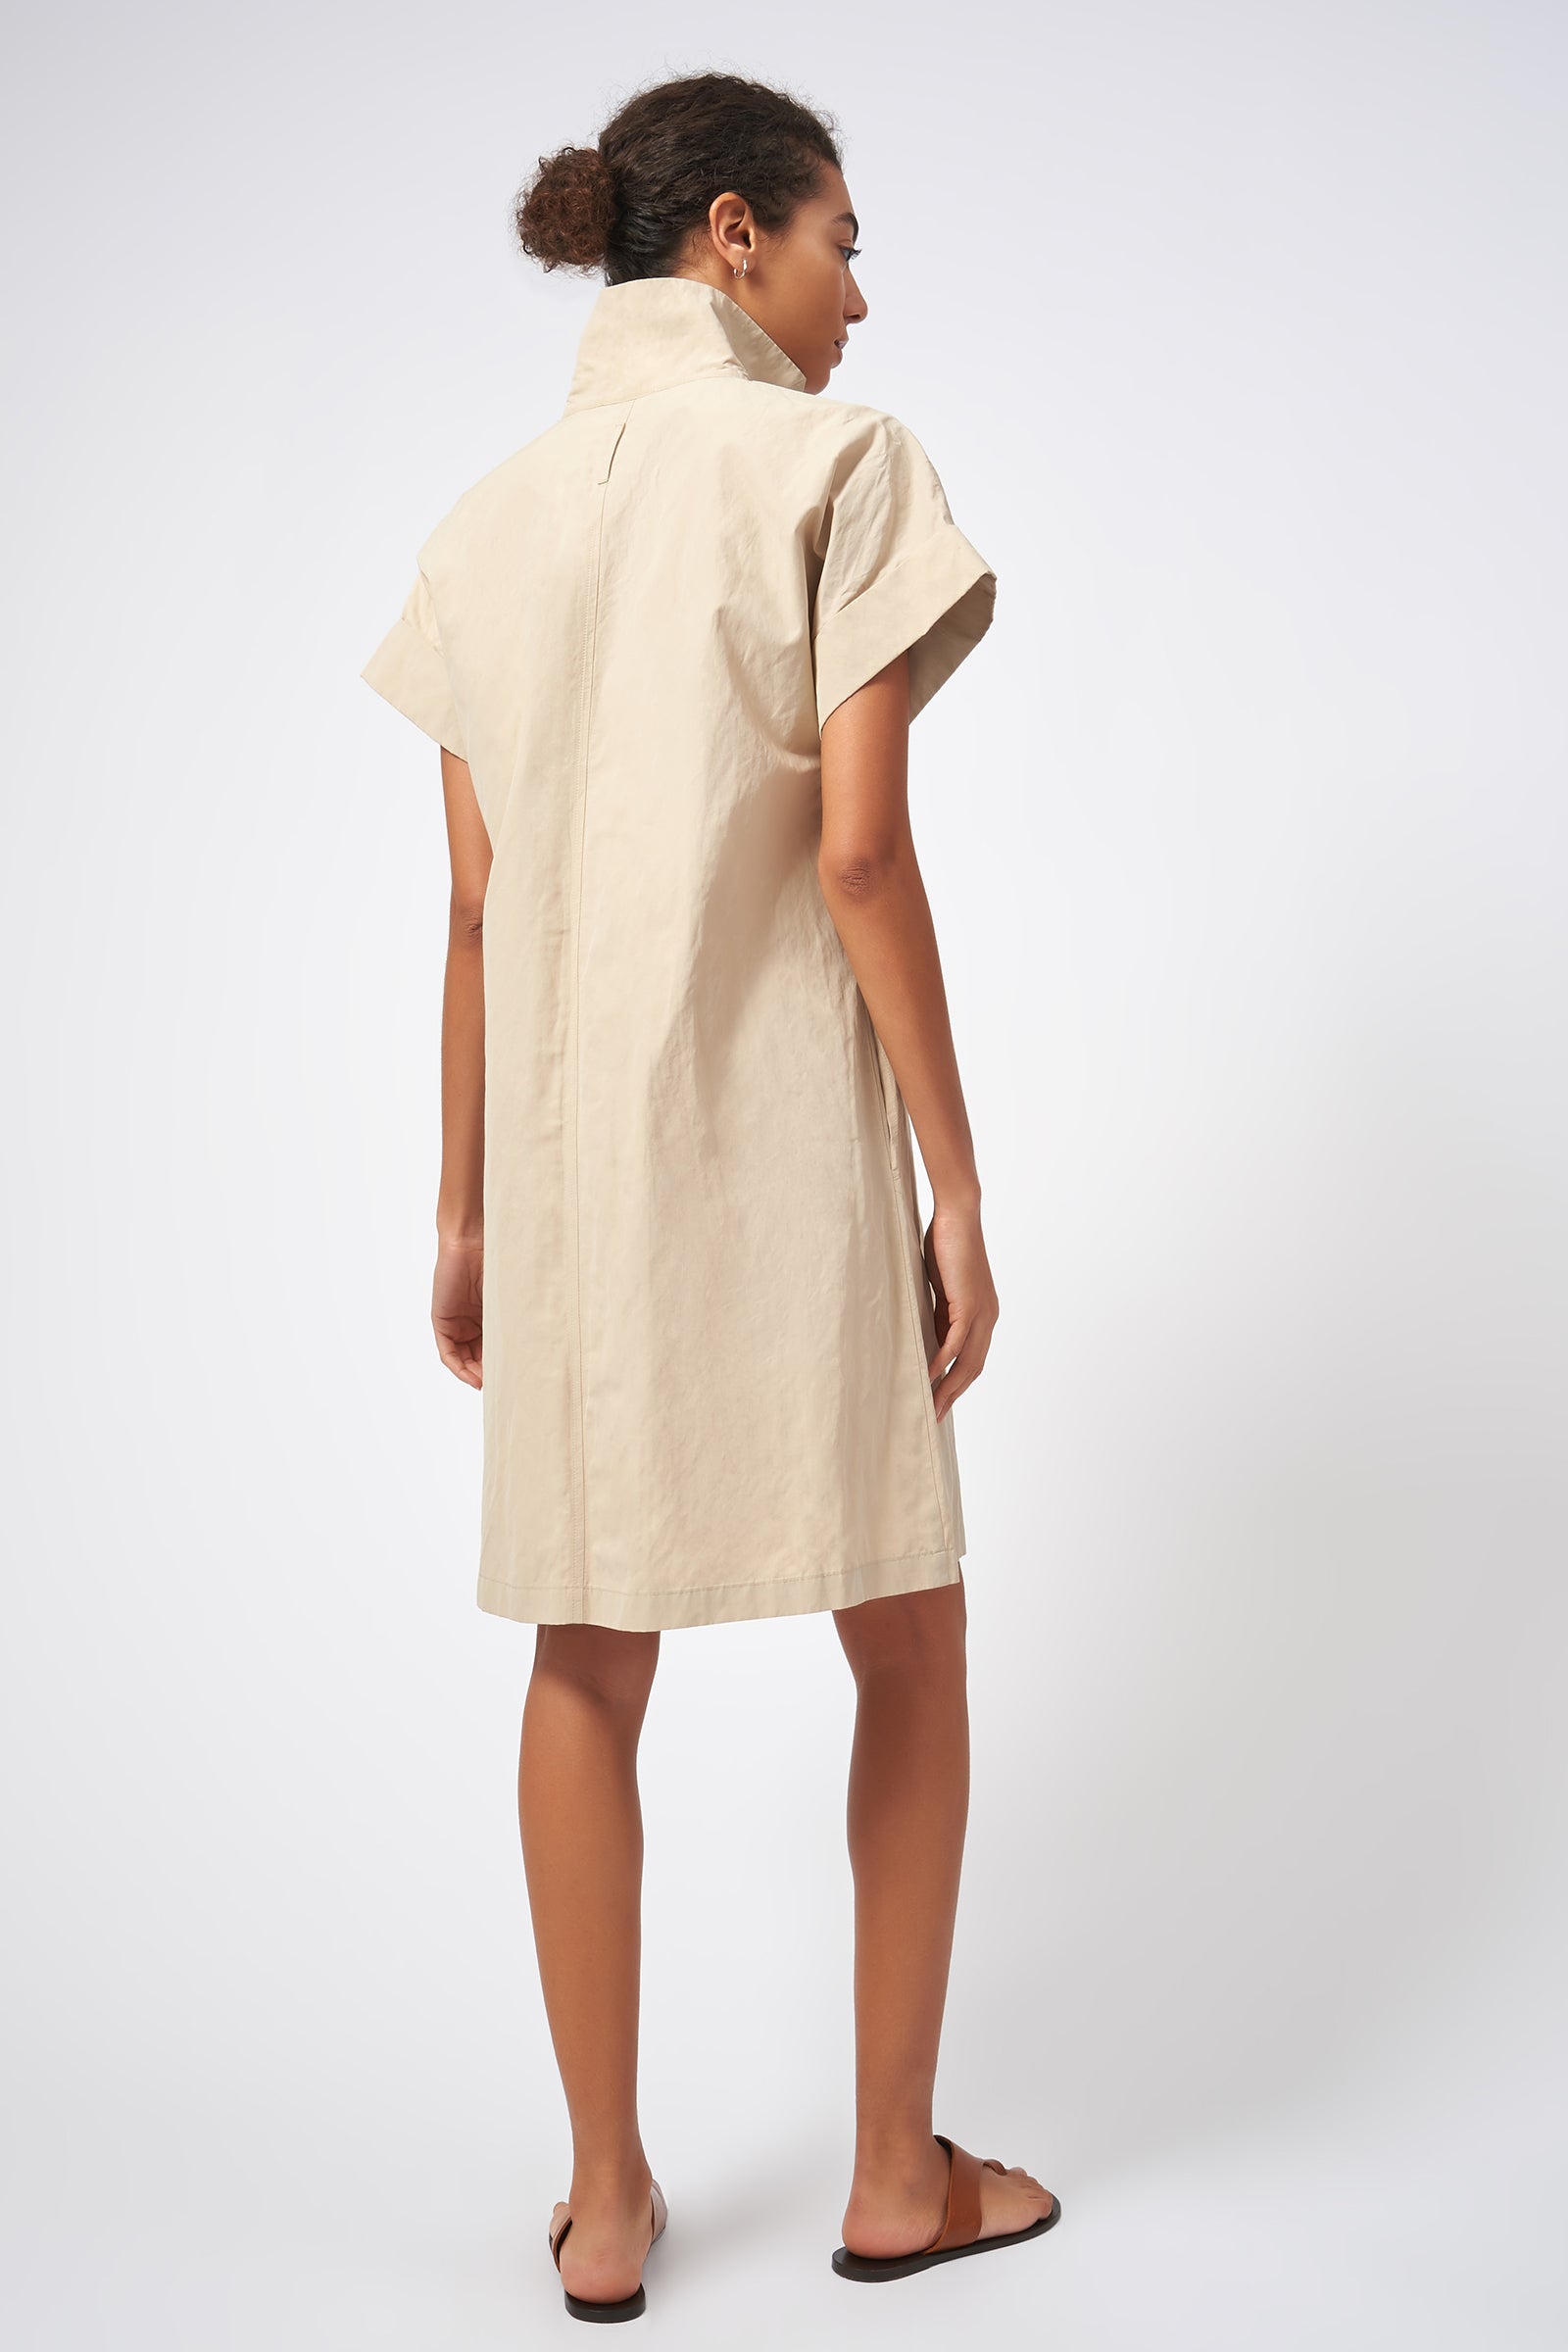 Kal Rieman Kimono Dress Italian Cotton Nylon Inox Khaki Dress On Model Back View 4